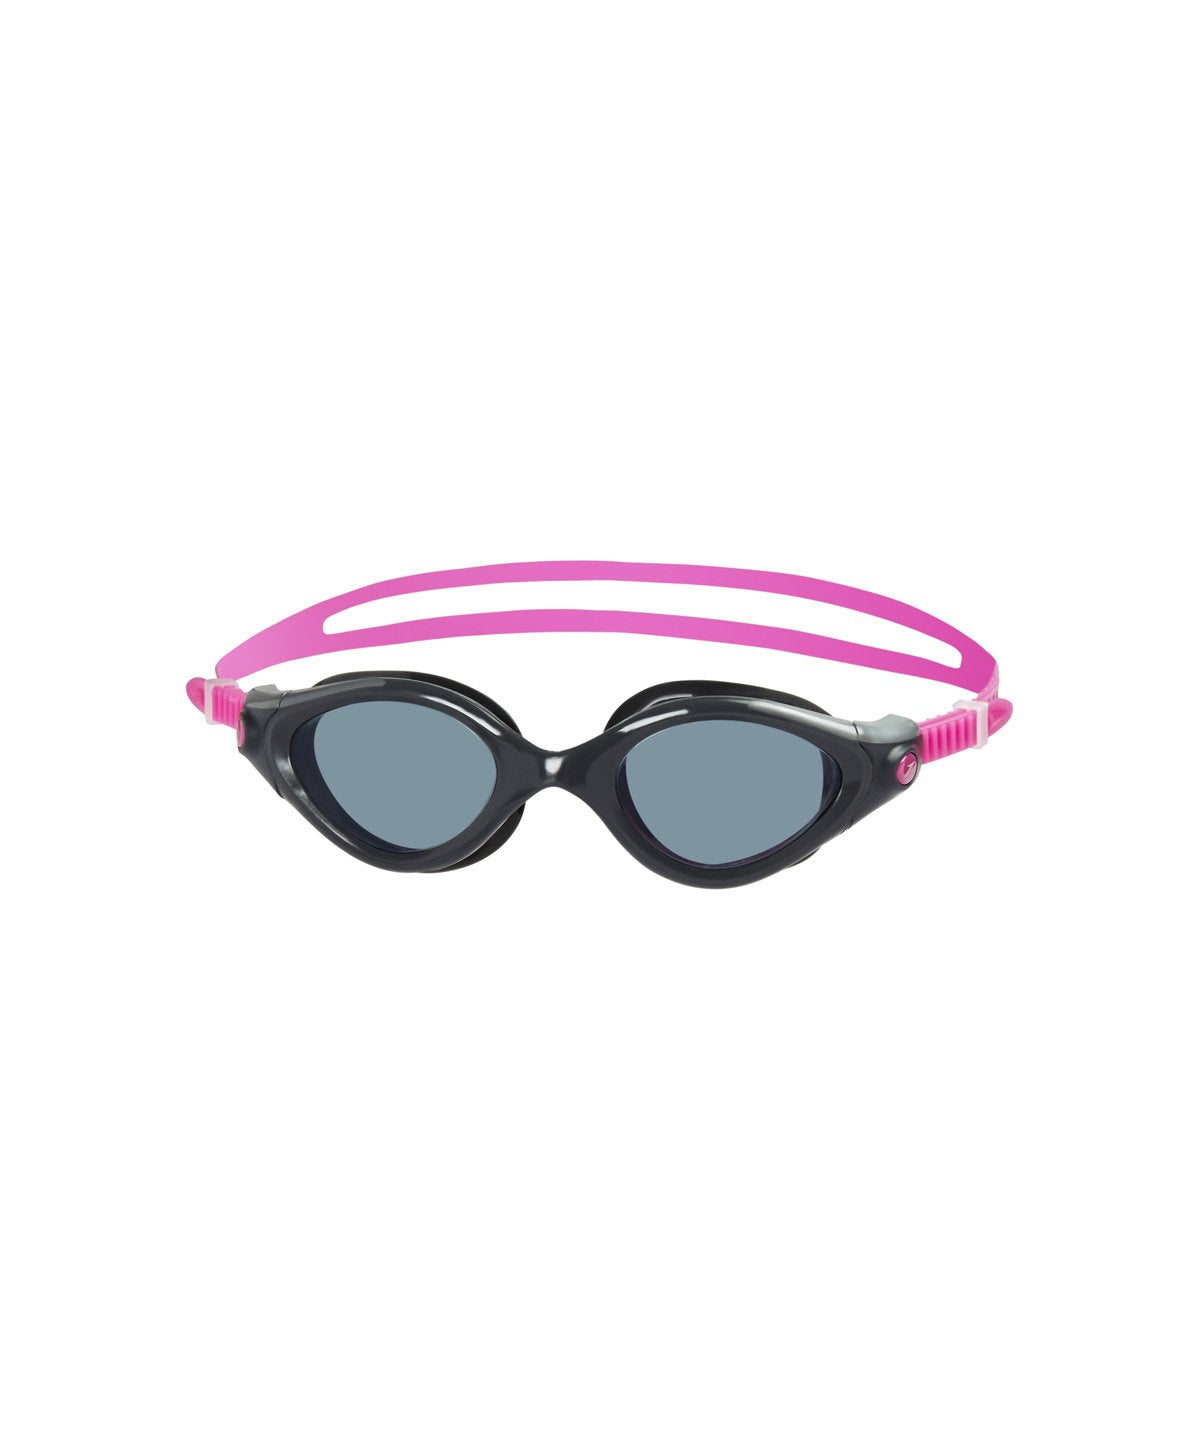 Speedo Female-Adult Futura Biofuse Female Goggles - Best Price online Prokicksports.com